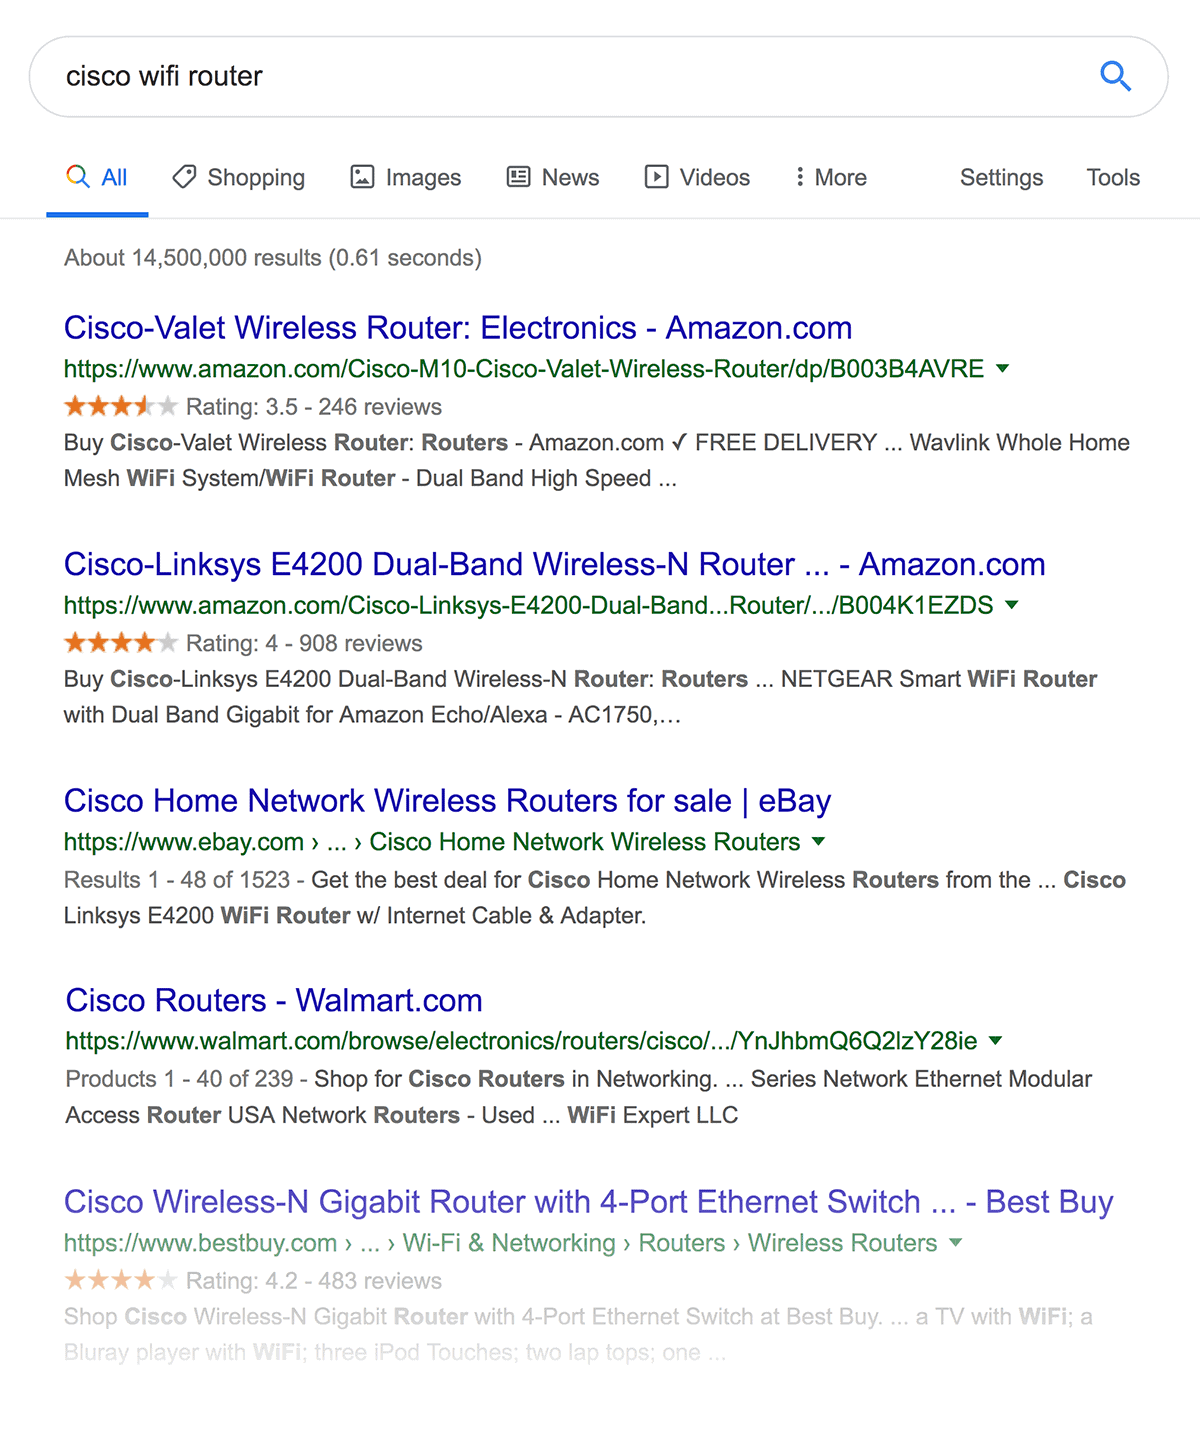 "cisco wifi router" search results